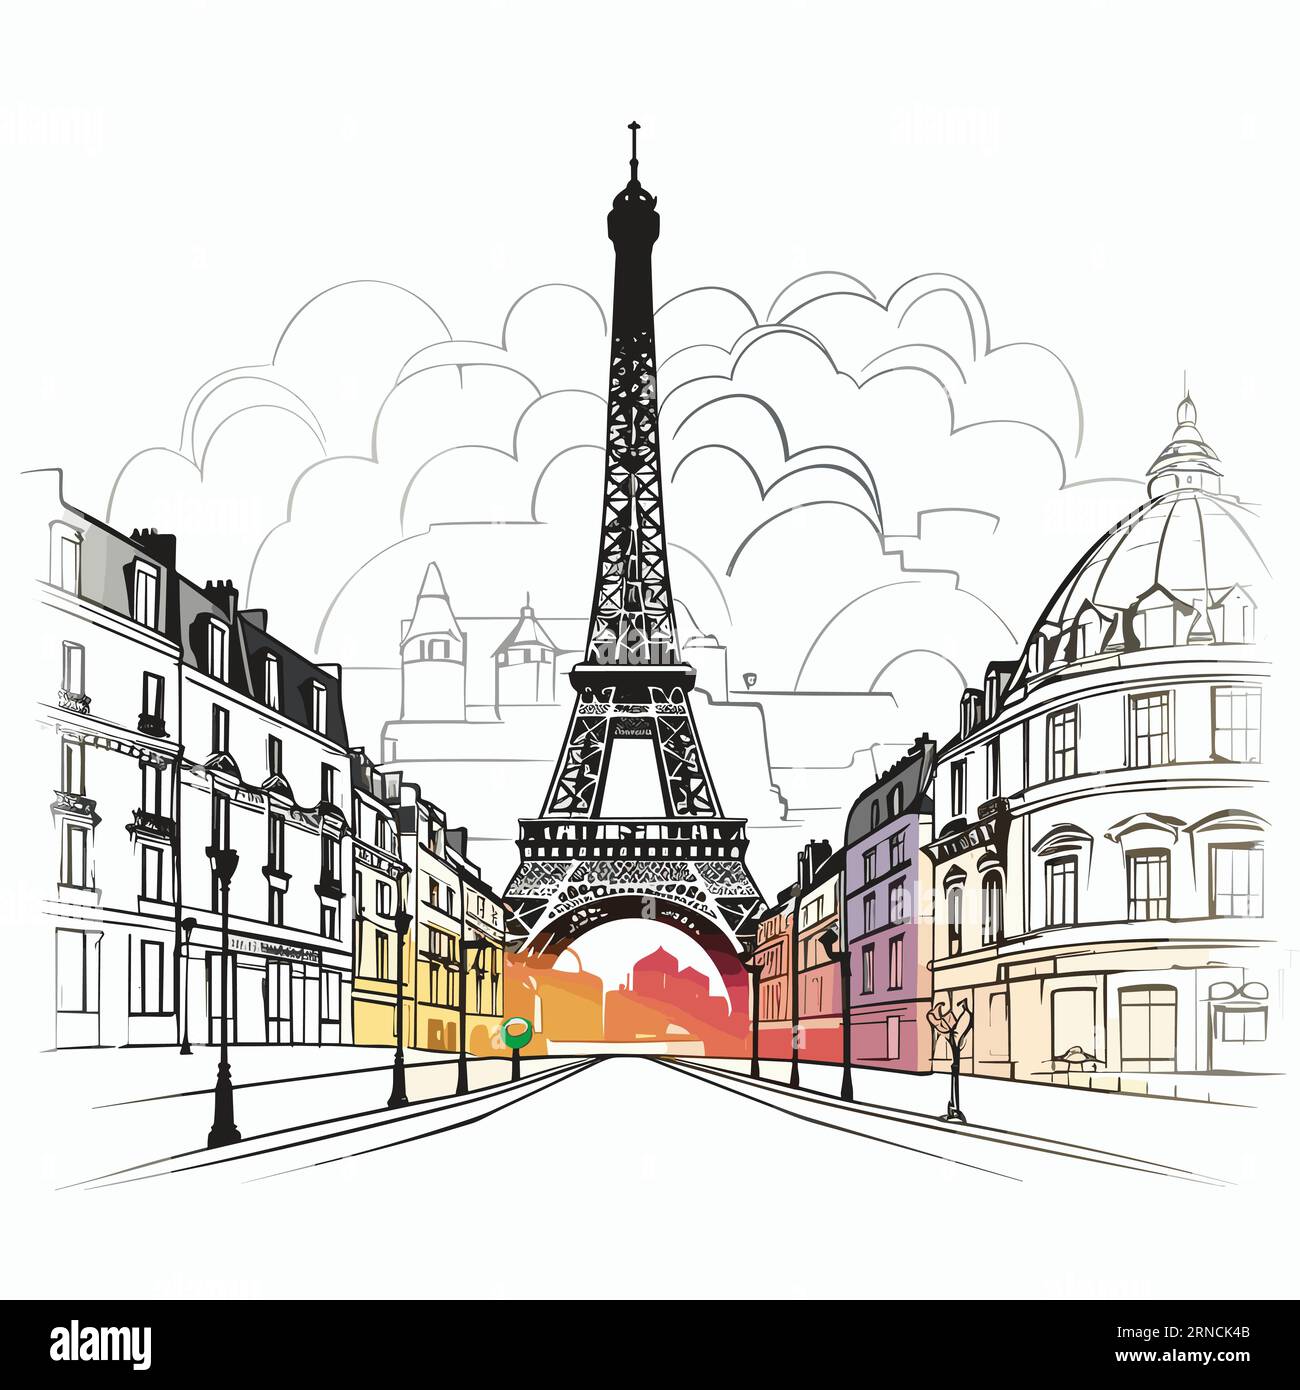 Buy Prints of The Eiffel Tower, Paris Drawing